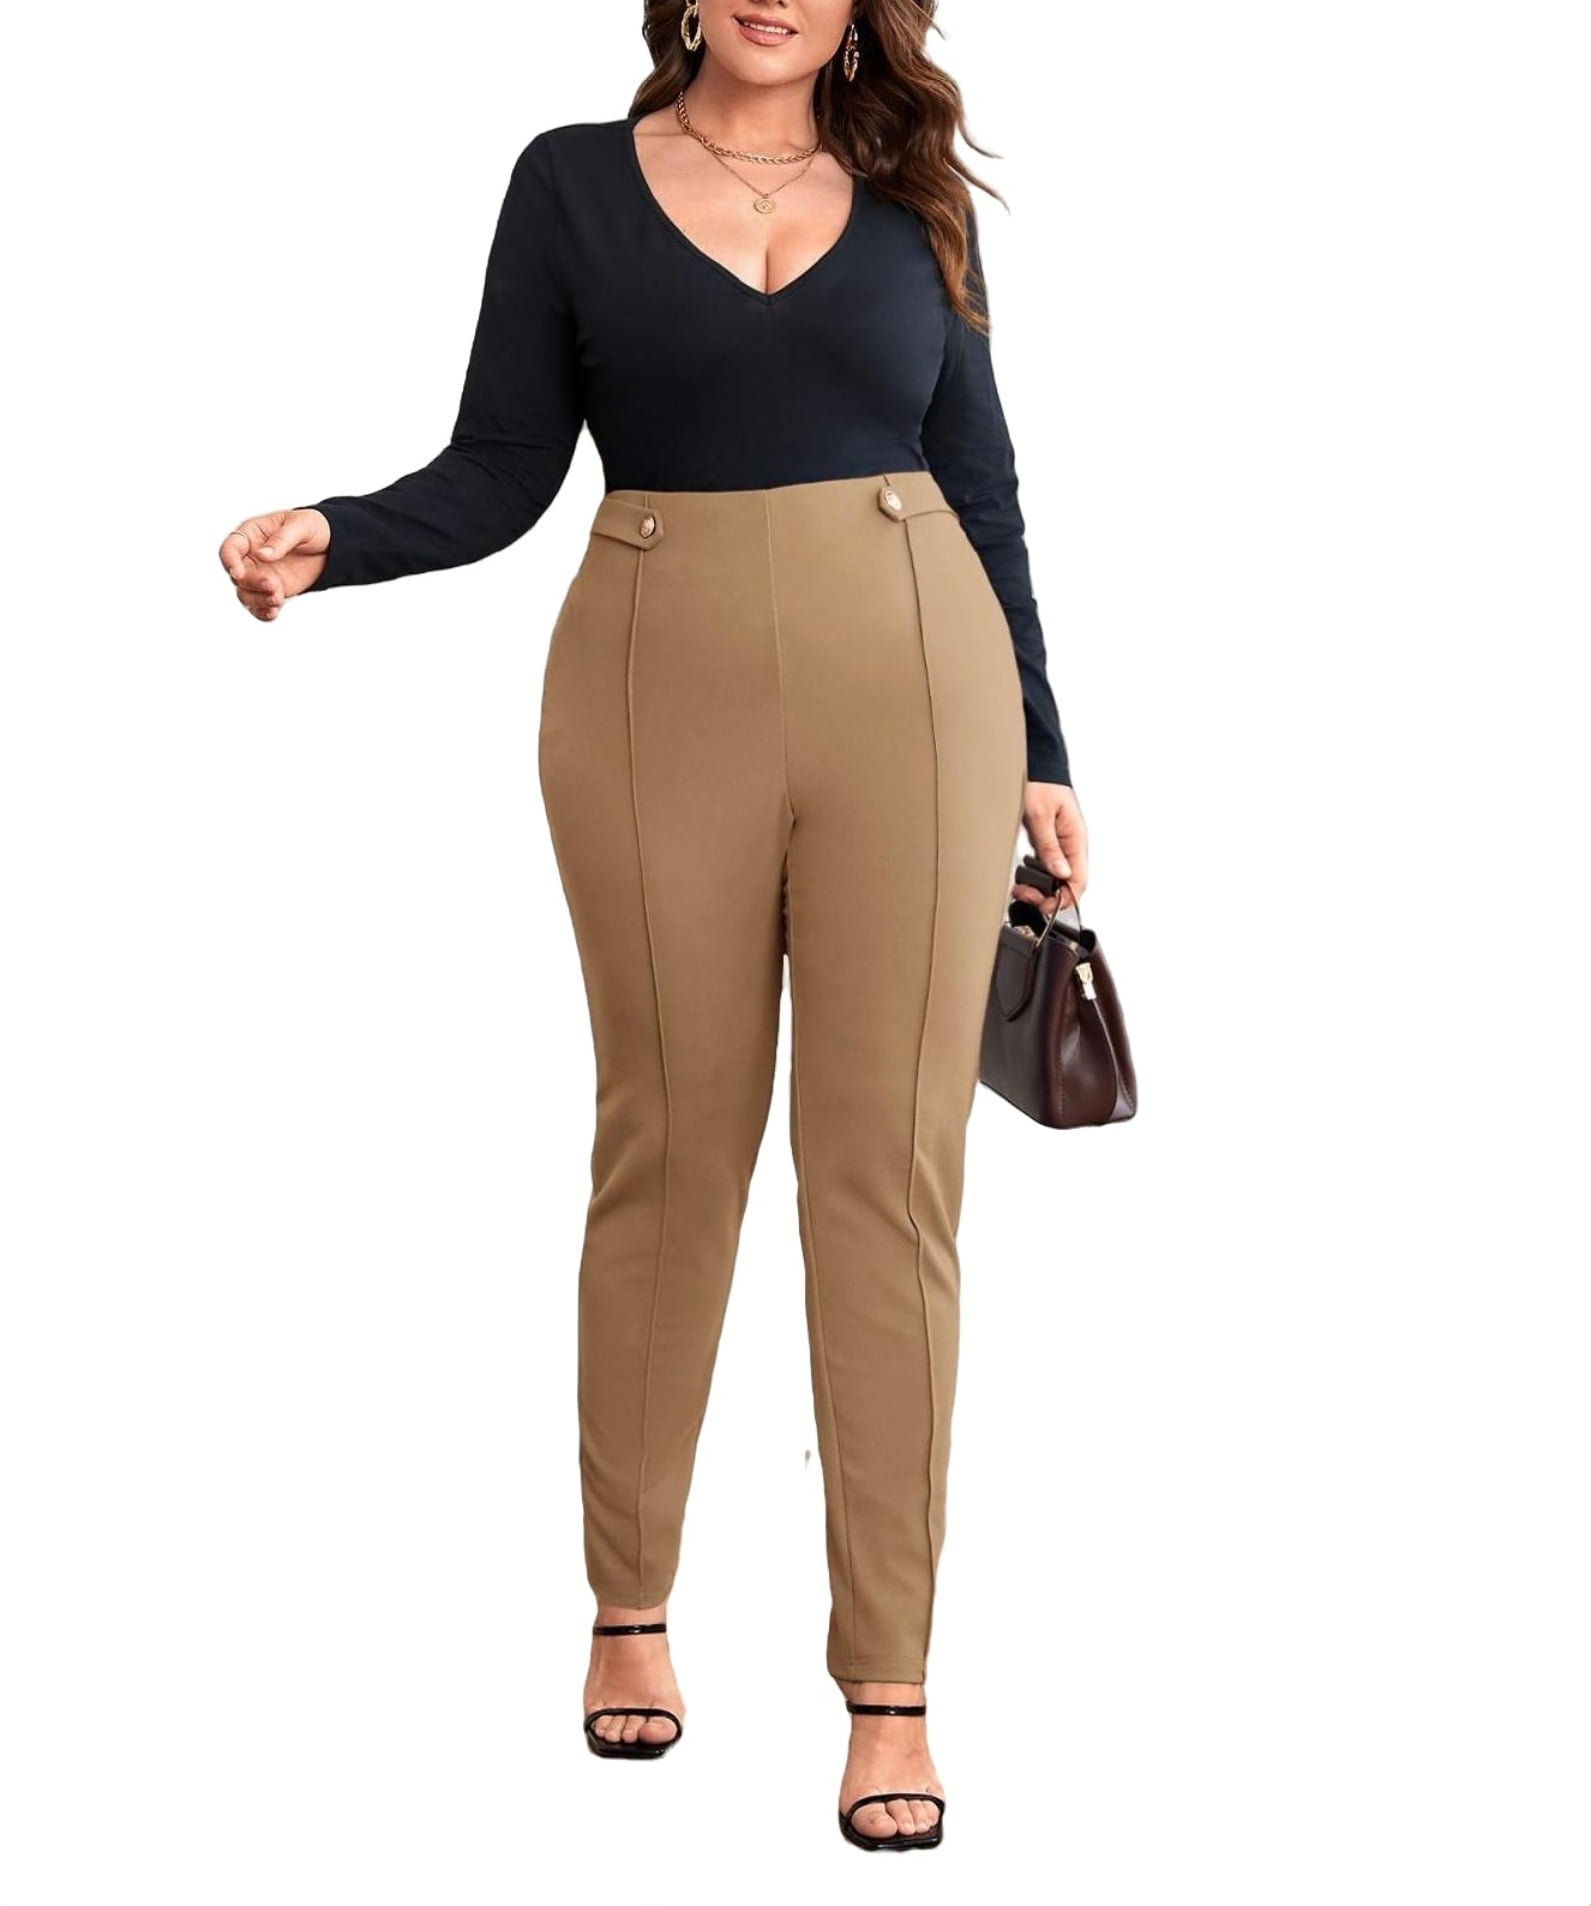 Women's Elegant Plain Skinny Camel Plus Size Pants 2XL